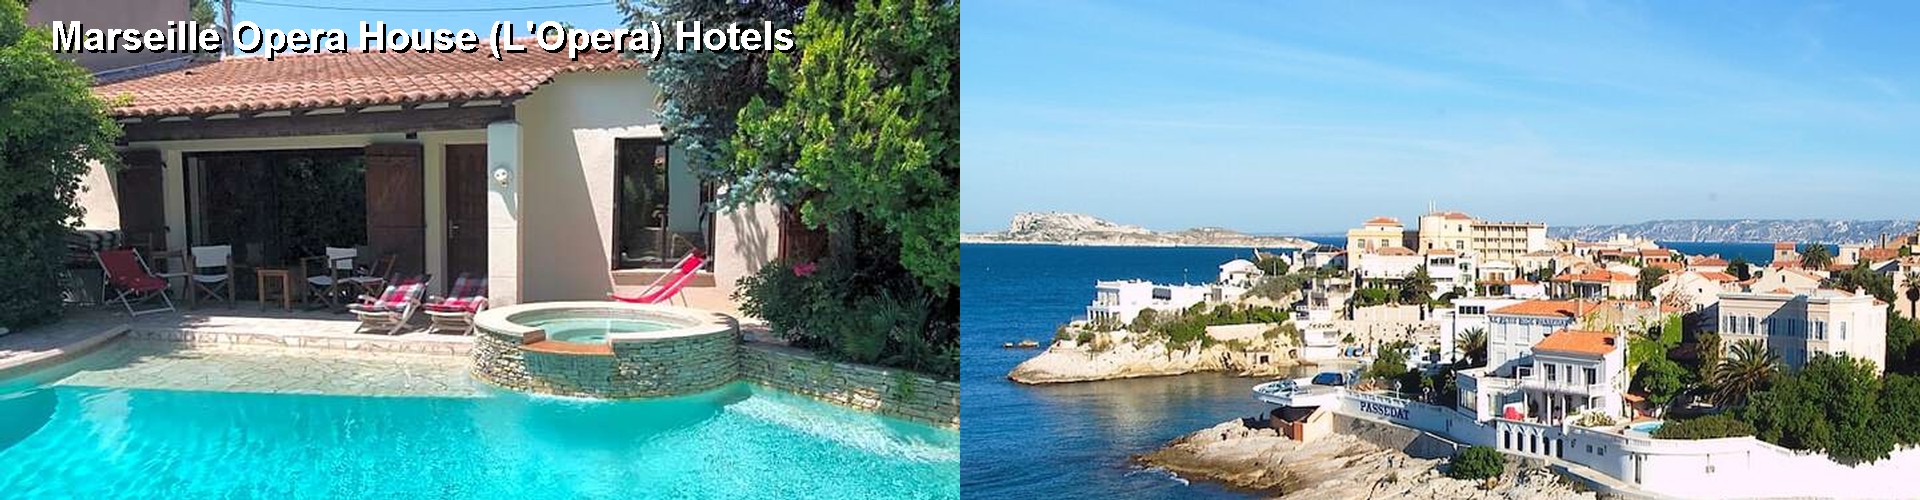 5 Best Hotels near Marseille Opera House (L'Opera)